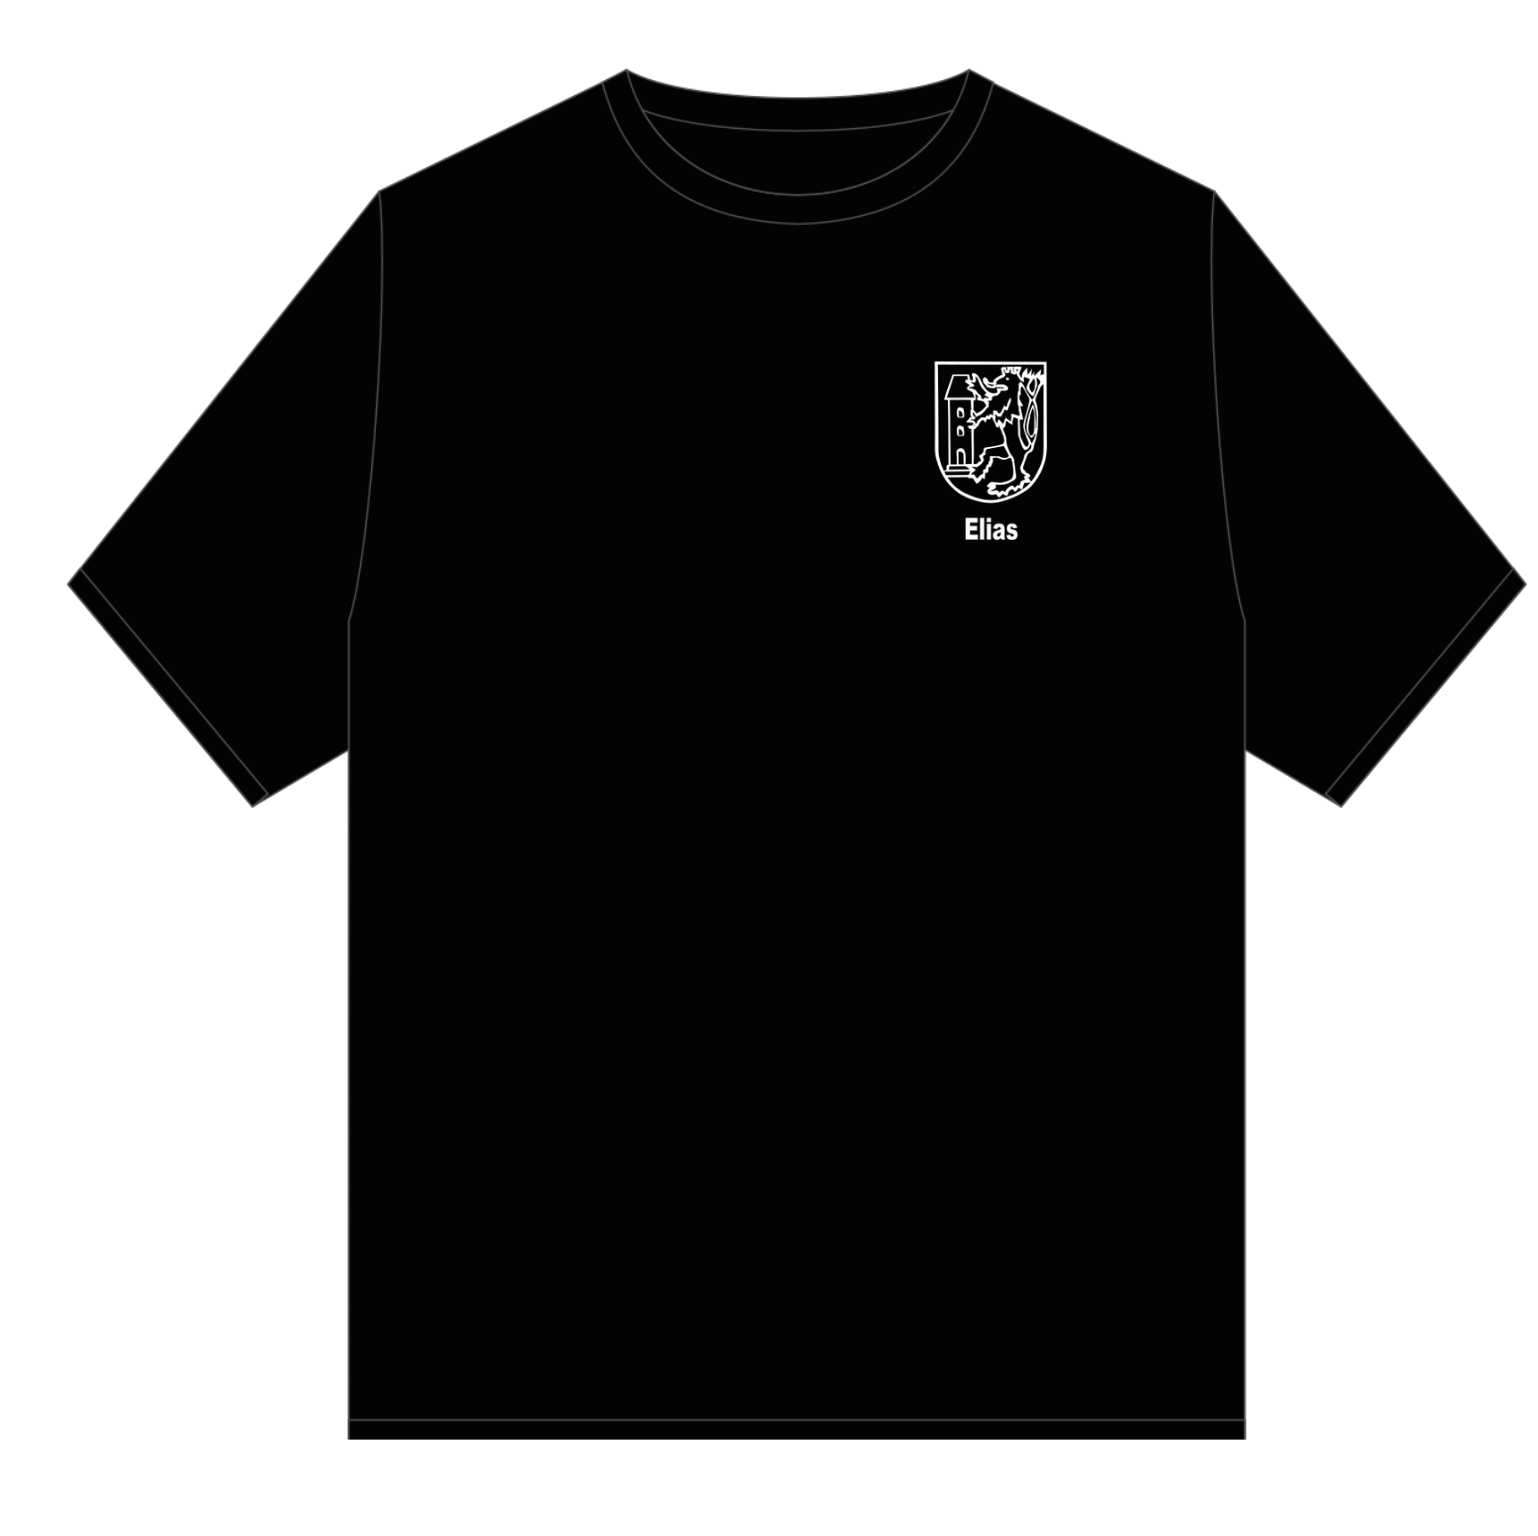 Prichsenstädter Jugend - T-Shirt schwarz